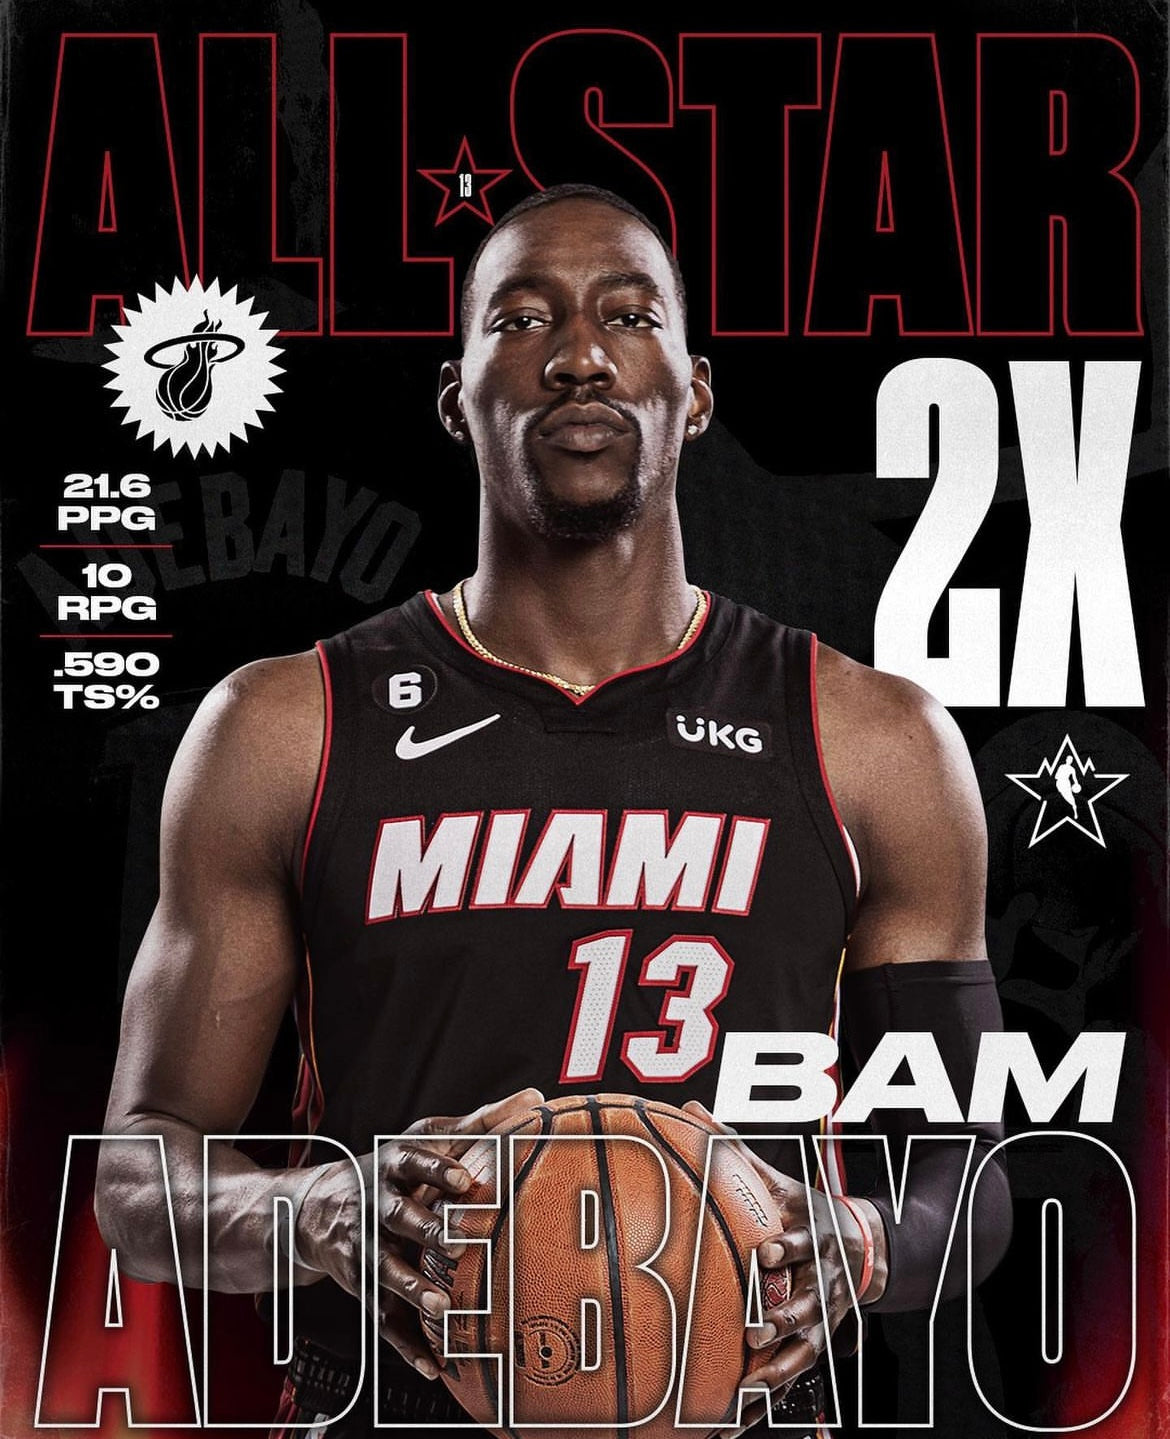 Miami Heat Bam Adebayo Nike Icon Edition Black NBA Swingman Jersey